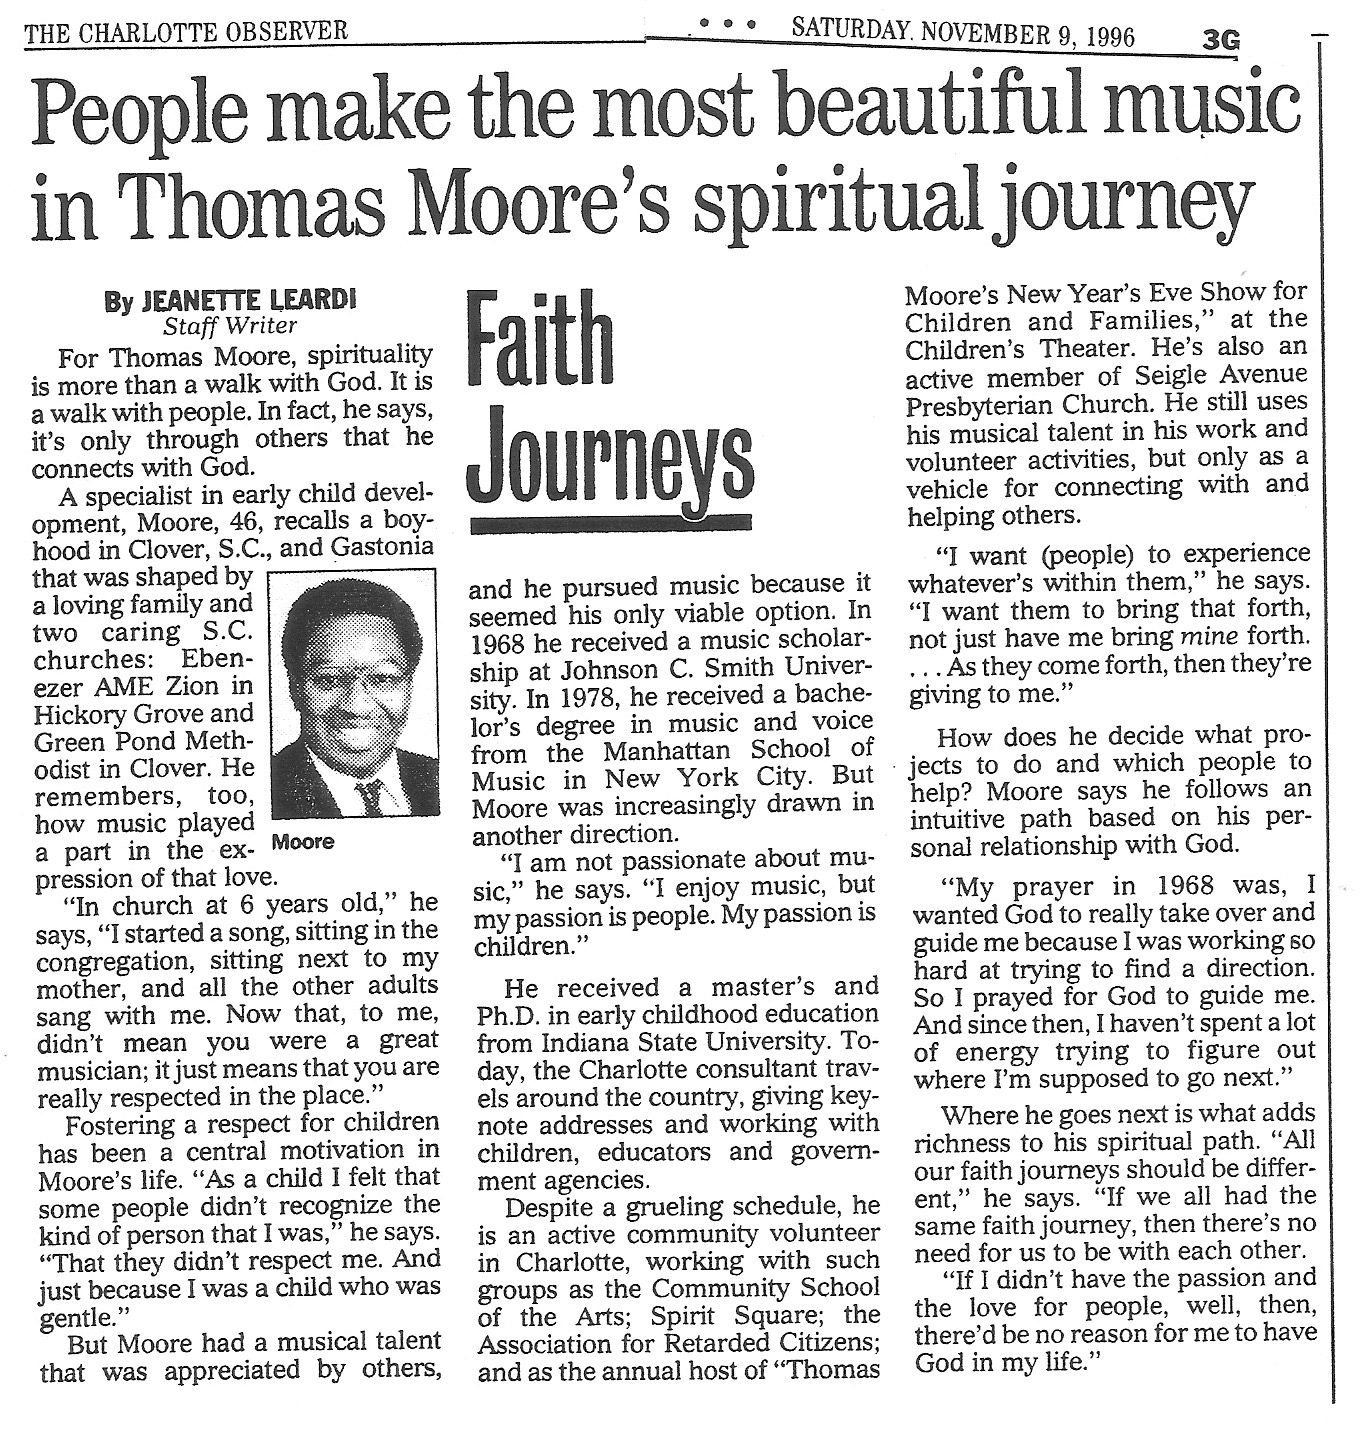 The Charlotte Observer, Nov. 9, 1996